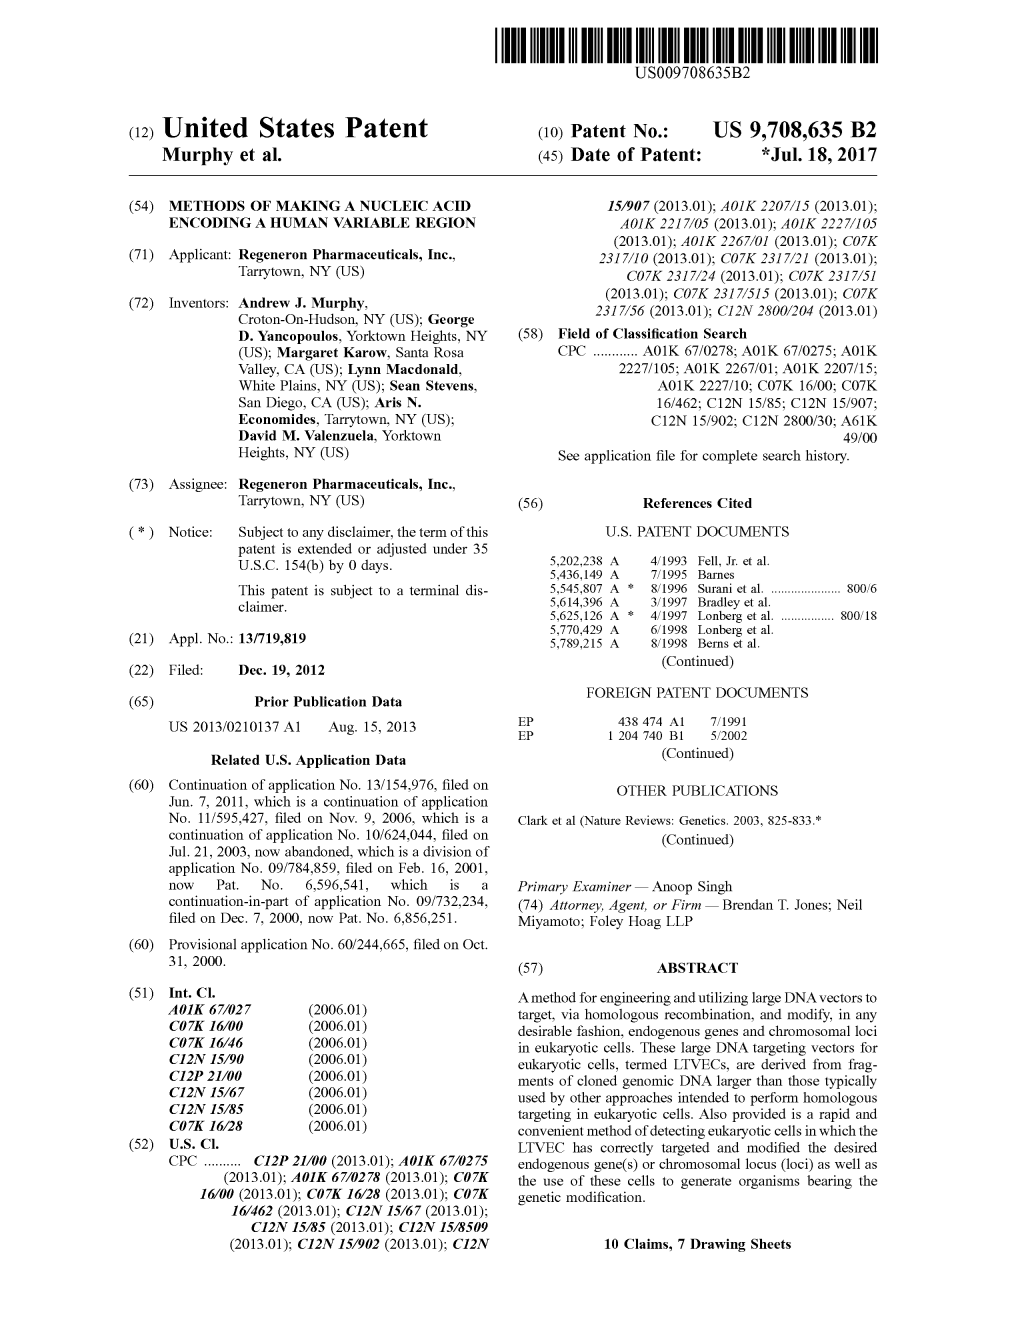 (12) United States Patent (10) Patent No.: US 9,708.635 B2 Murphy Et Al